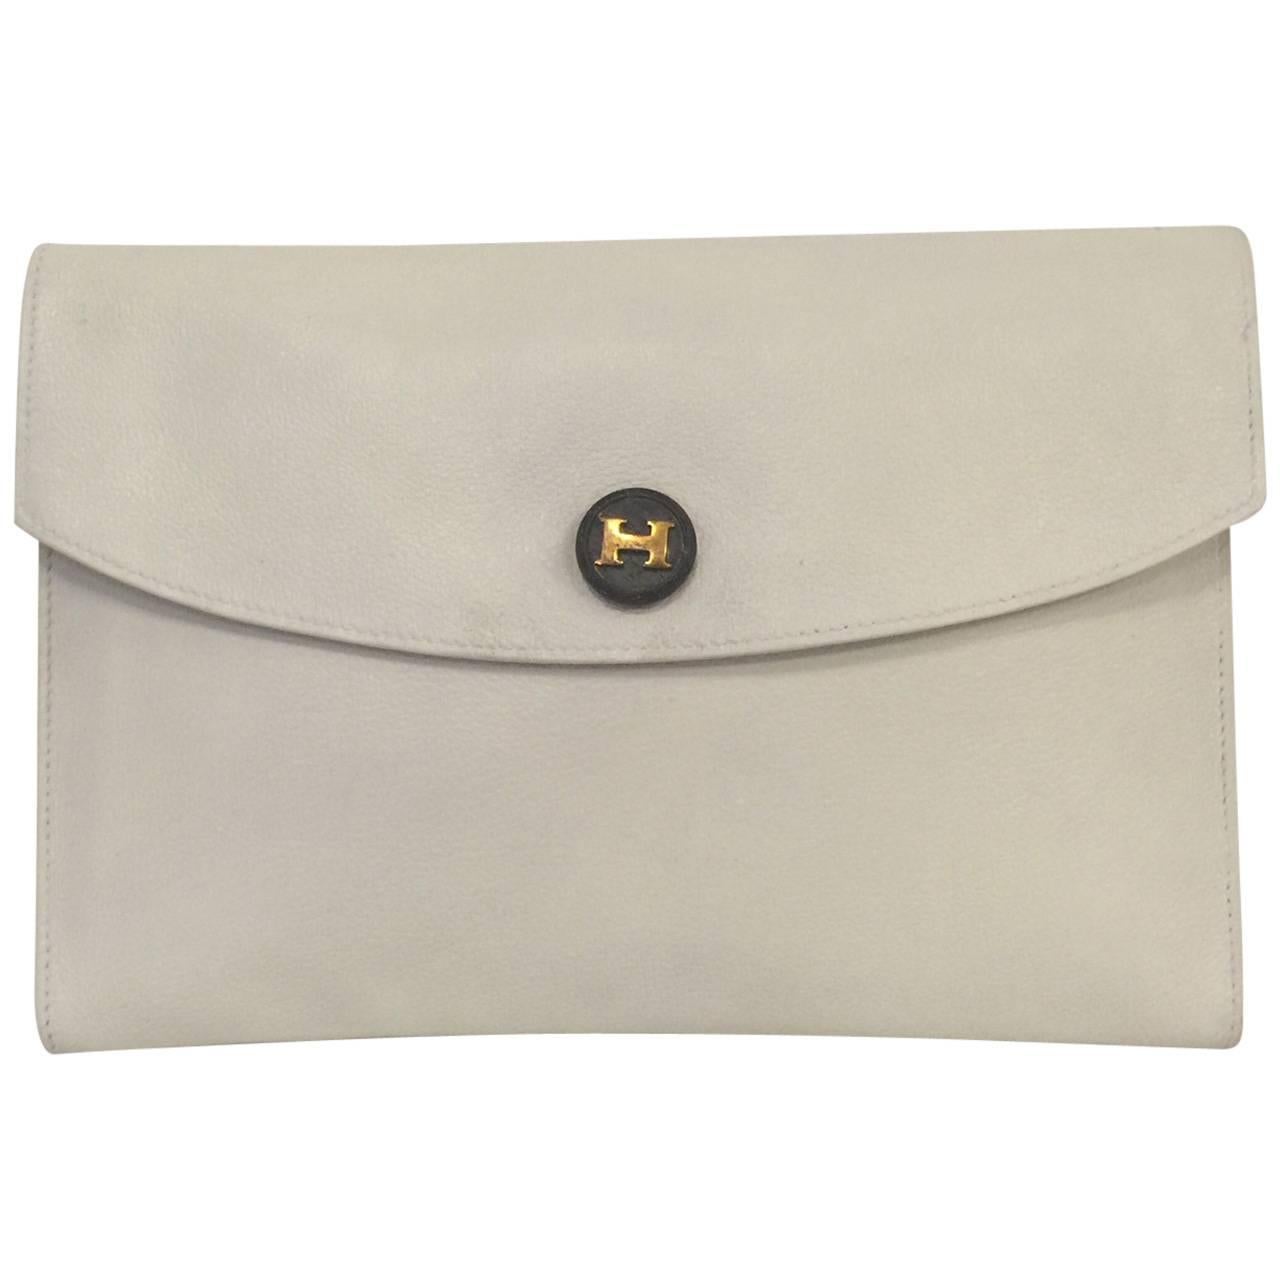 Vintage Hermes White Leather Envelope Clutch GHW